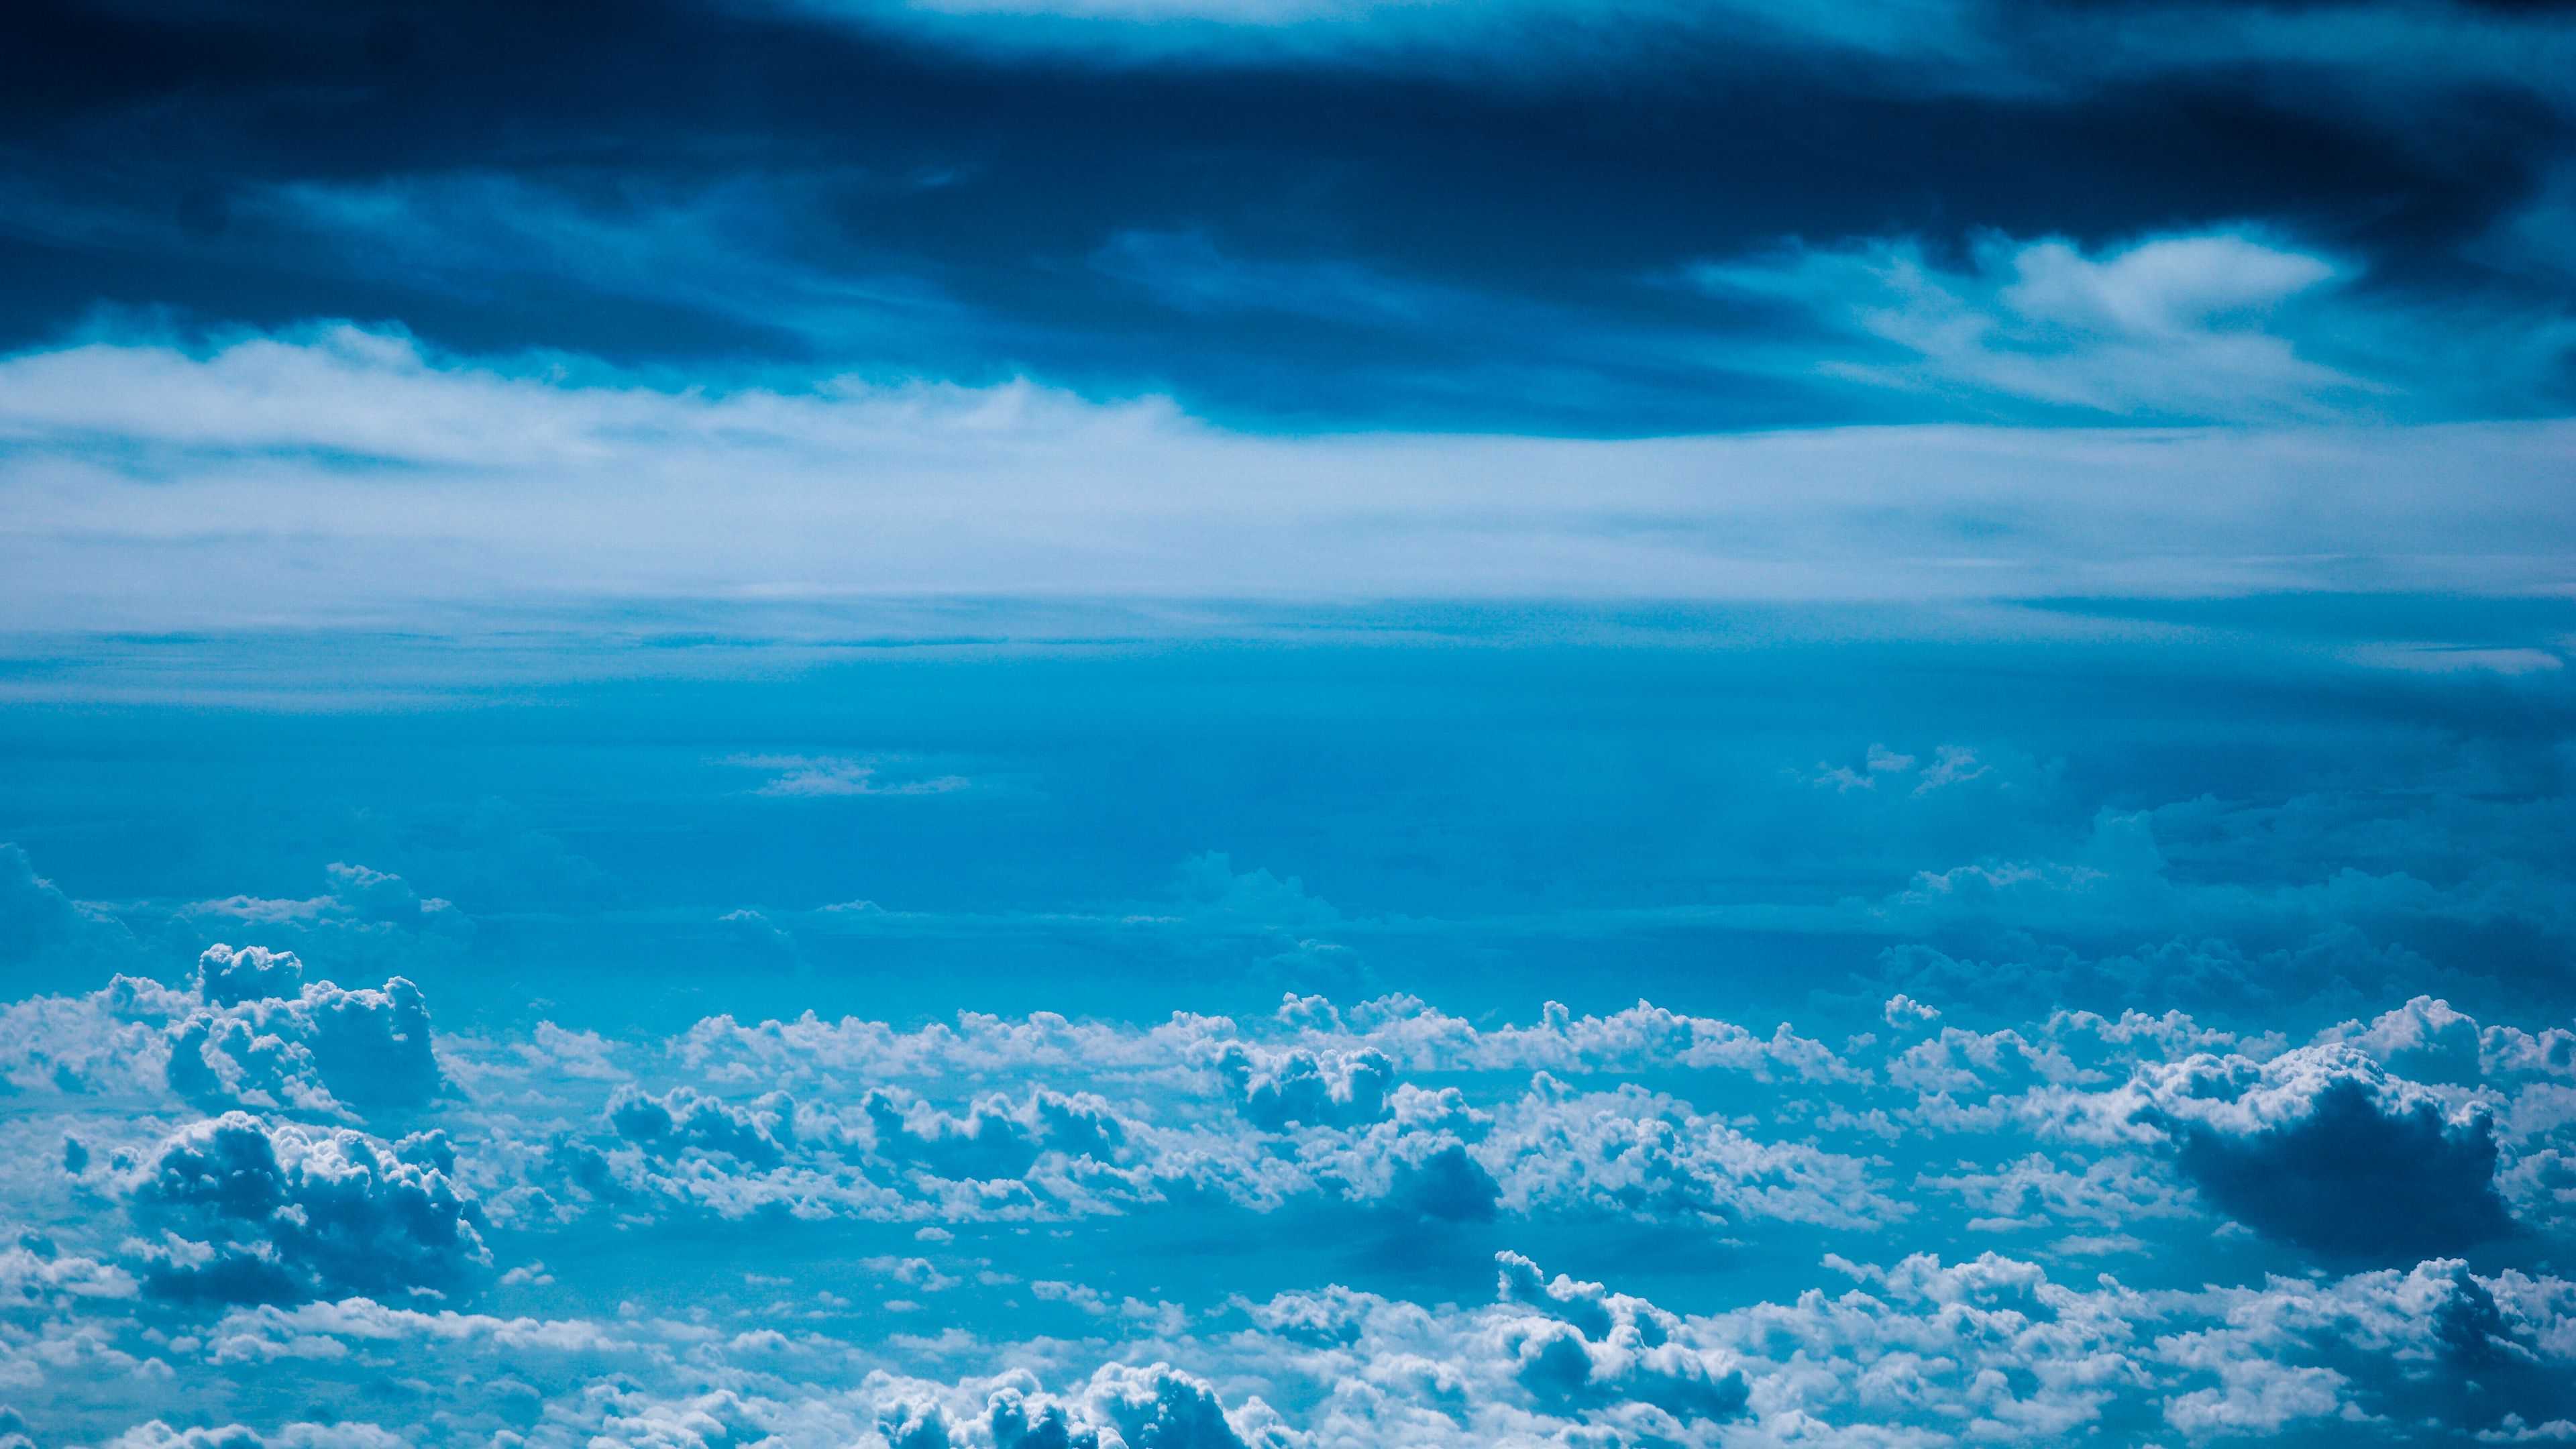 Download wallpaper 3840x2160 sky, clouds, blue 4k uhd 16:9 hd background